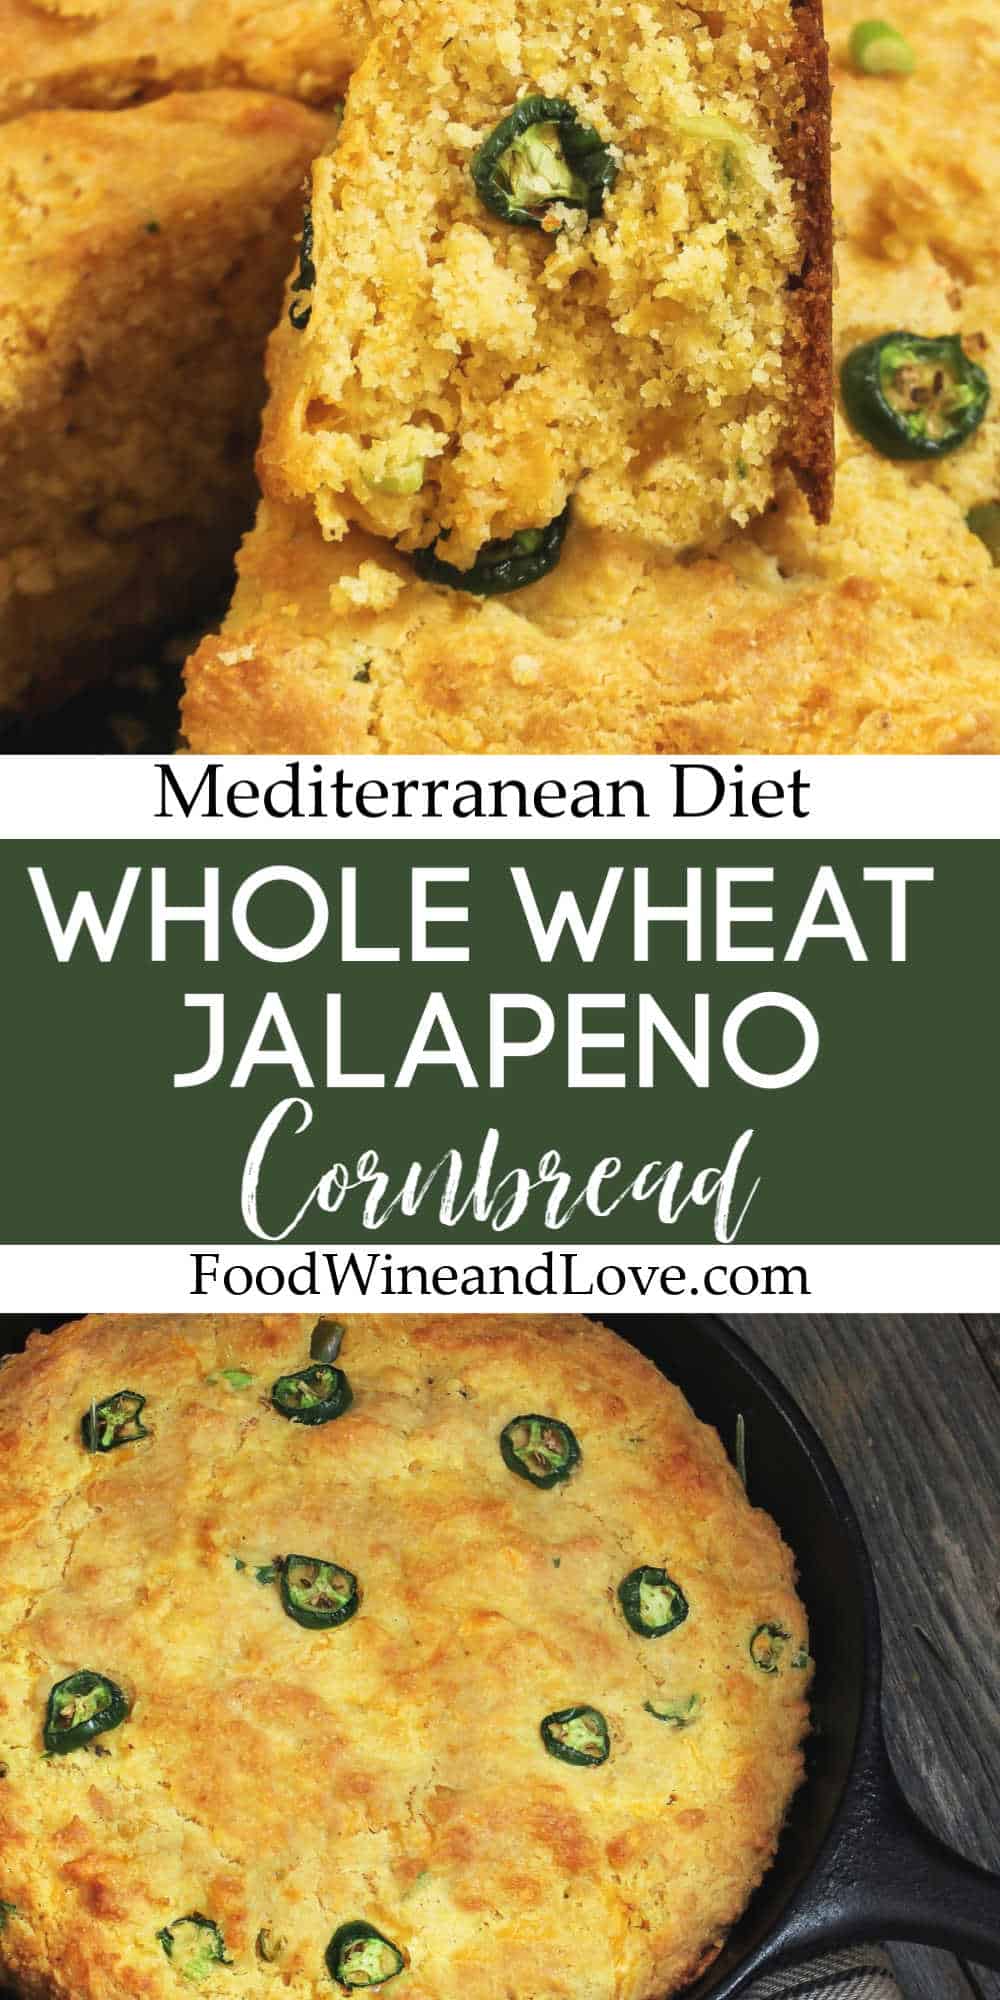 Whole Wheat Jalapeno Cornbread